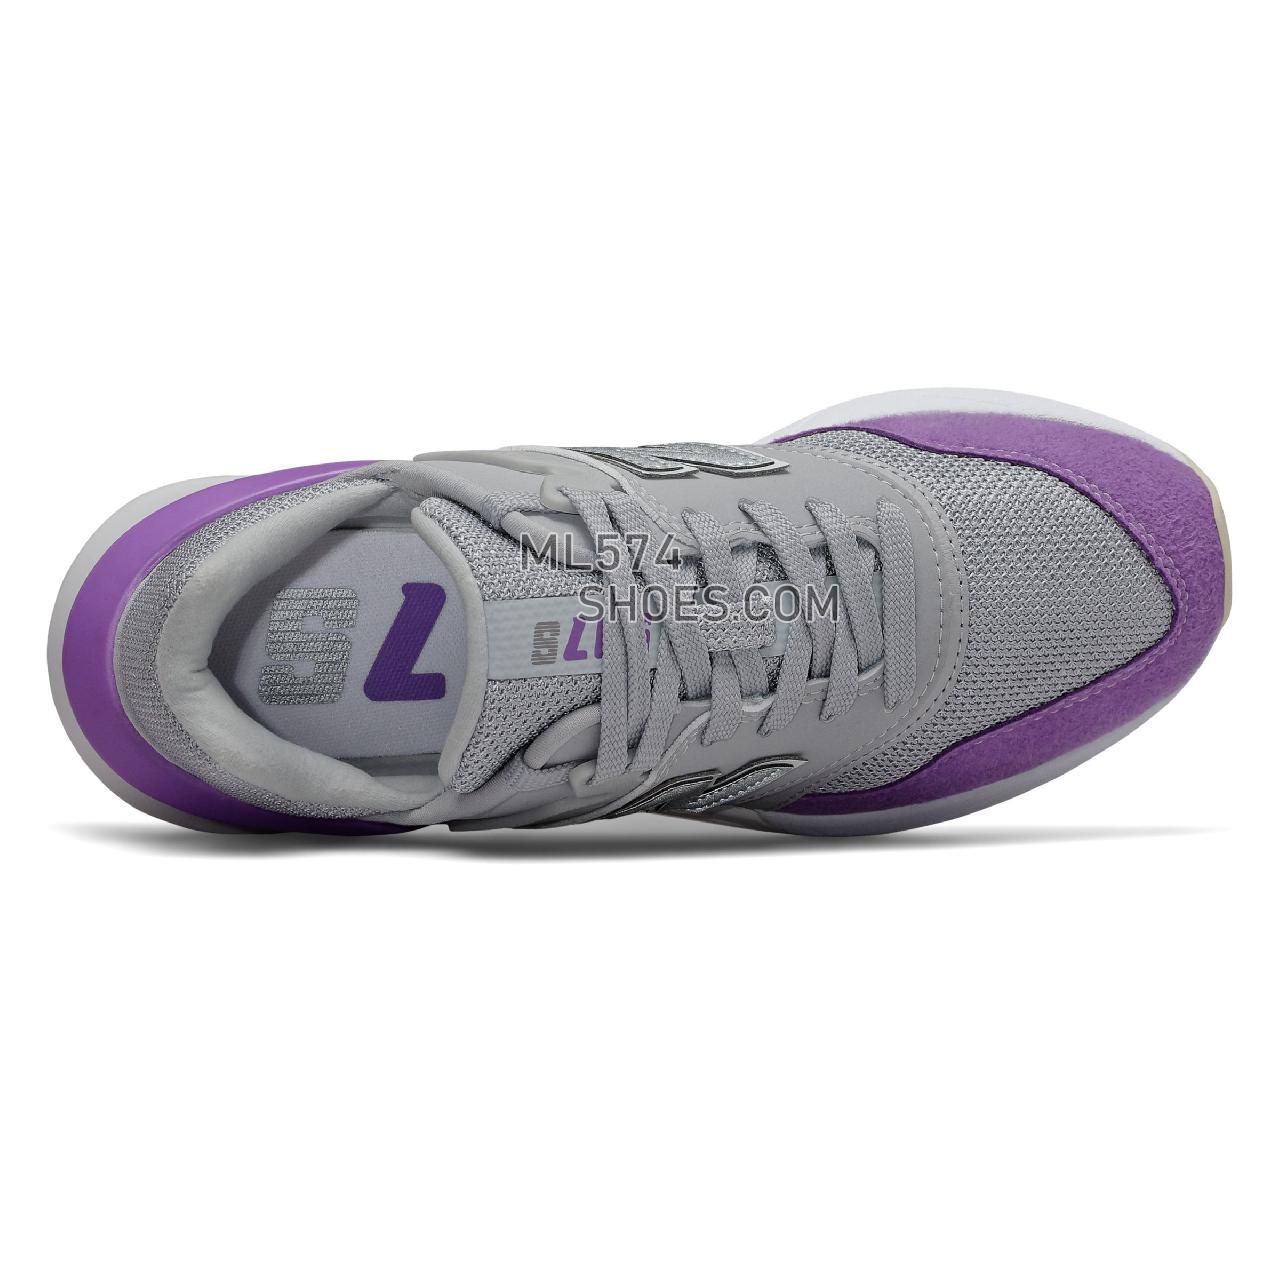 New Balance 997 Sport - Women's Sport Style Sneakers - Light Aluminum with Neo Violet - WS997GFL